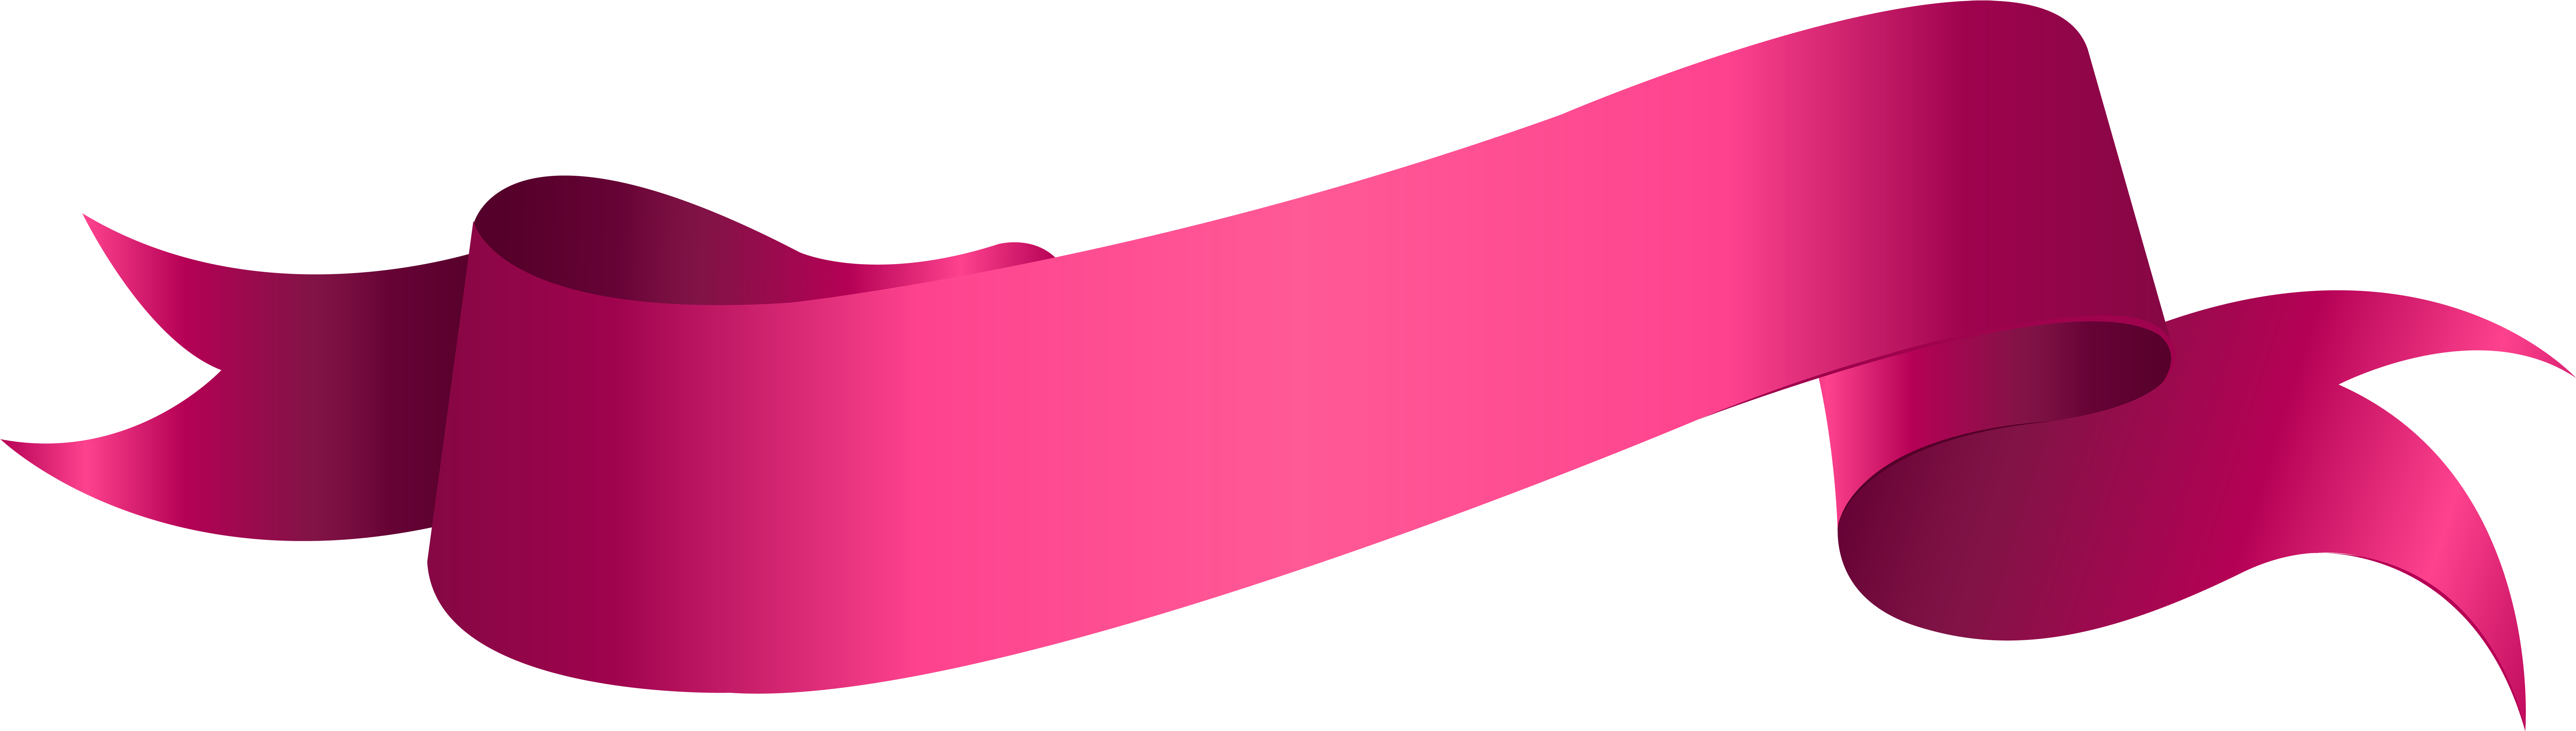 Pink Banner Clipart Transparent - Png Download (8000x2333), Png Download